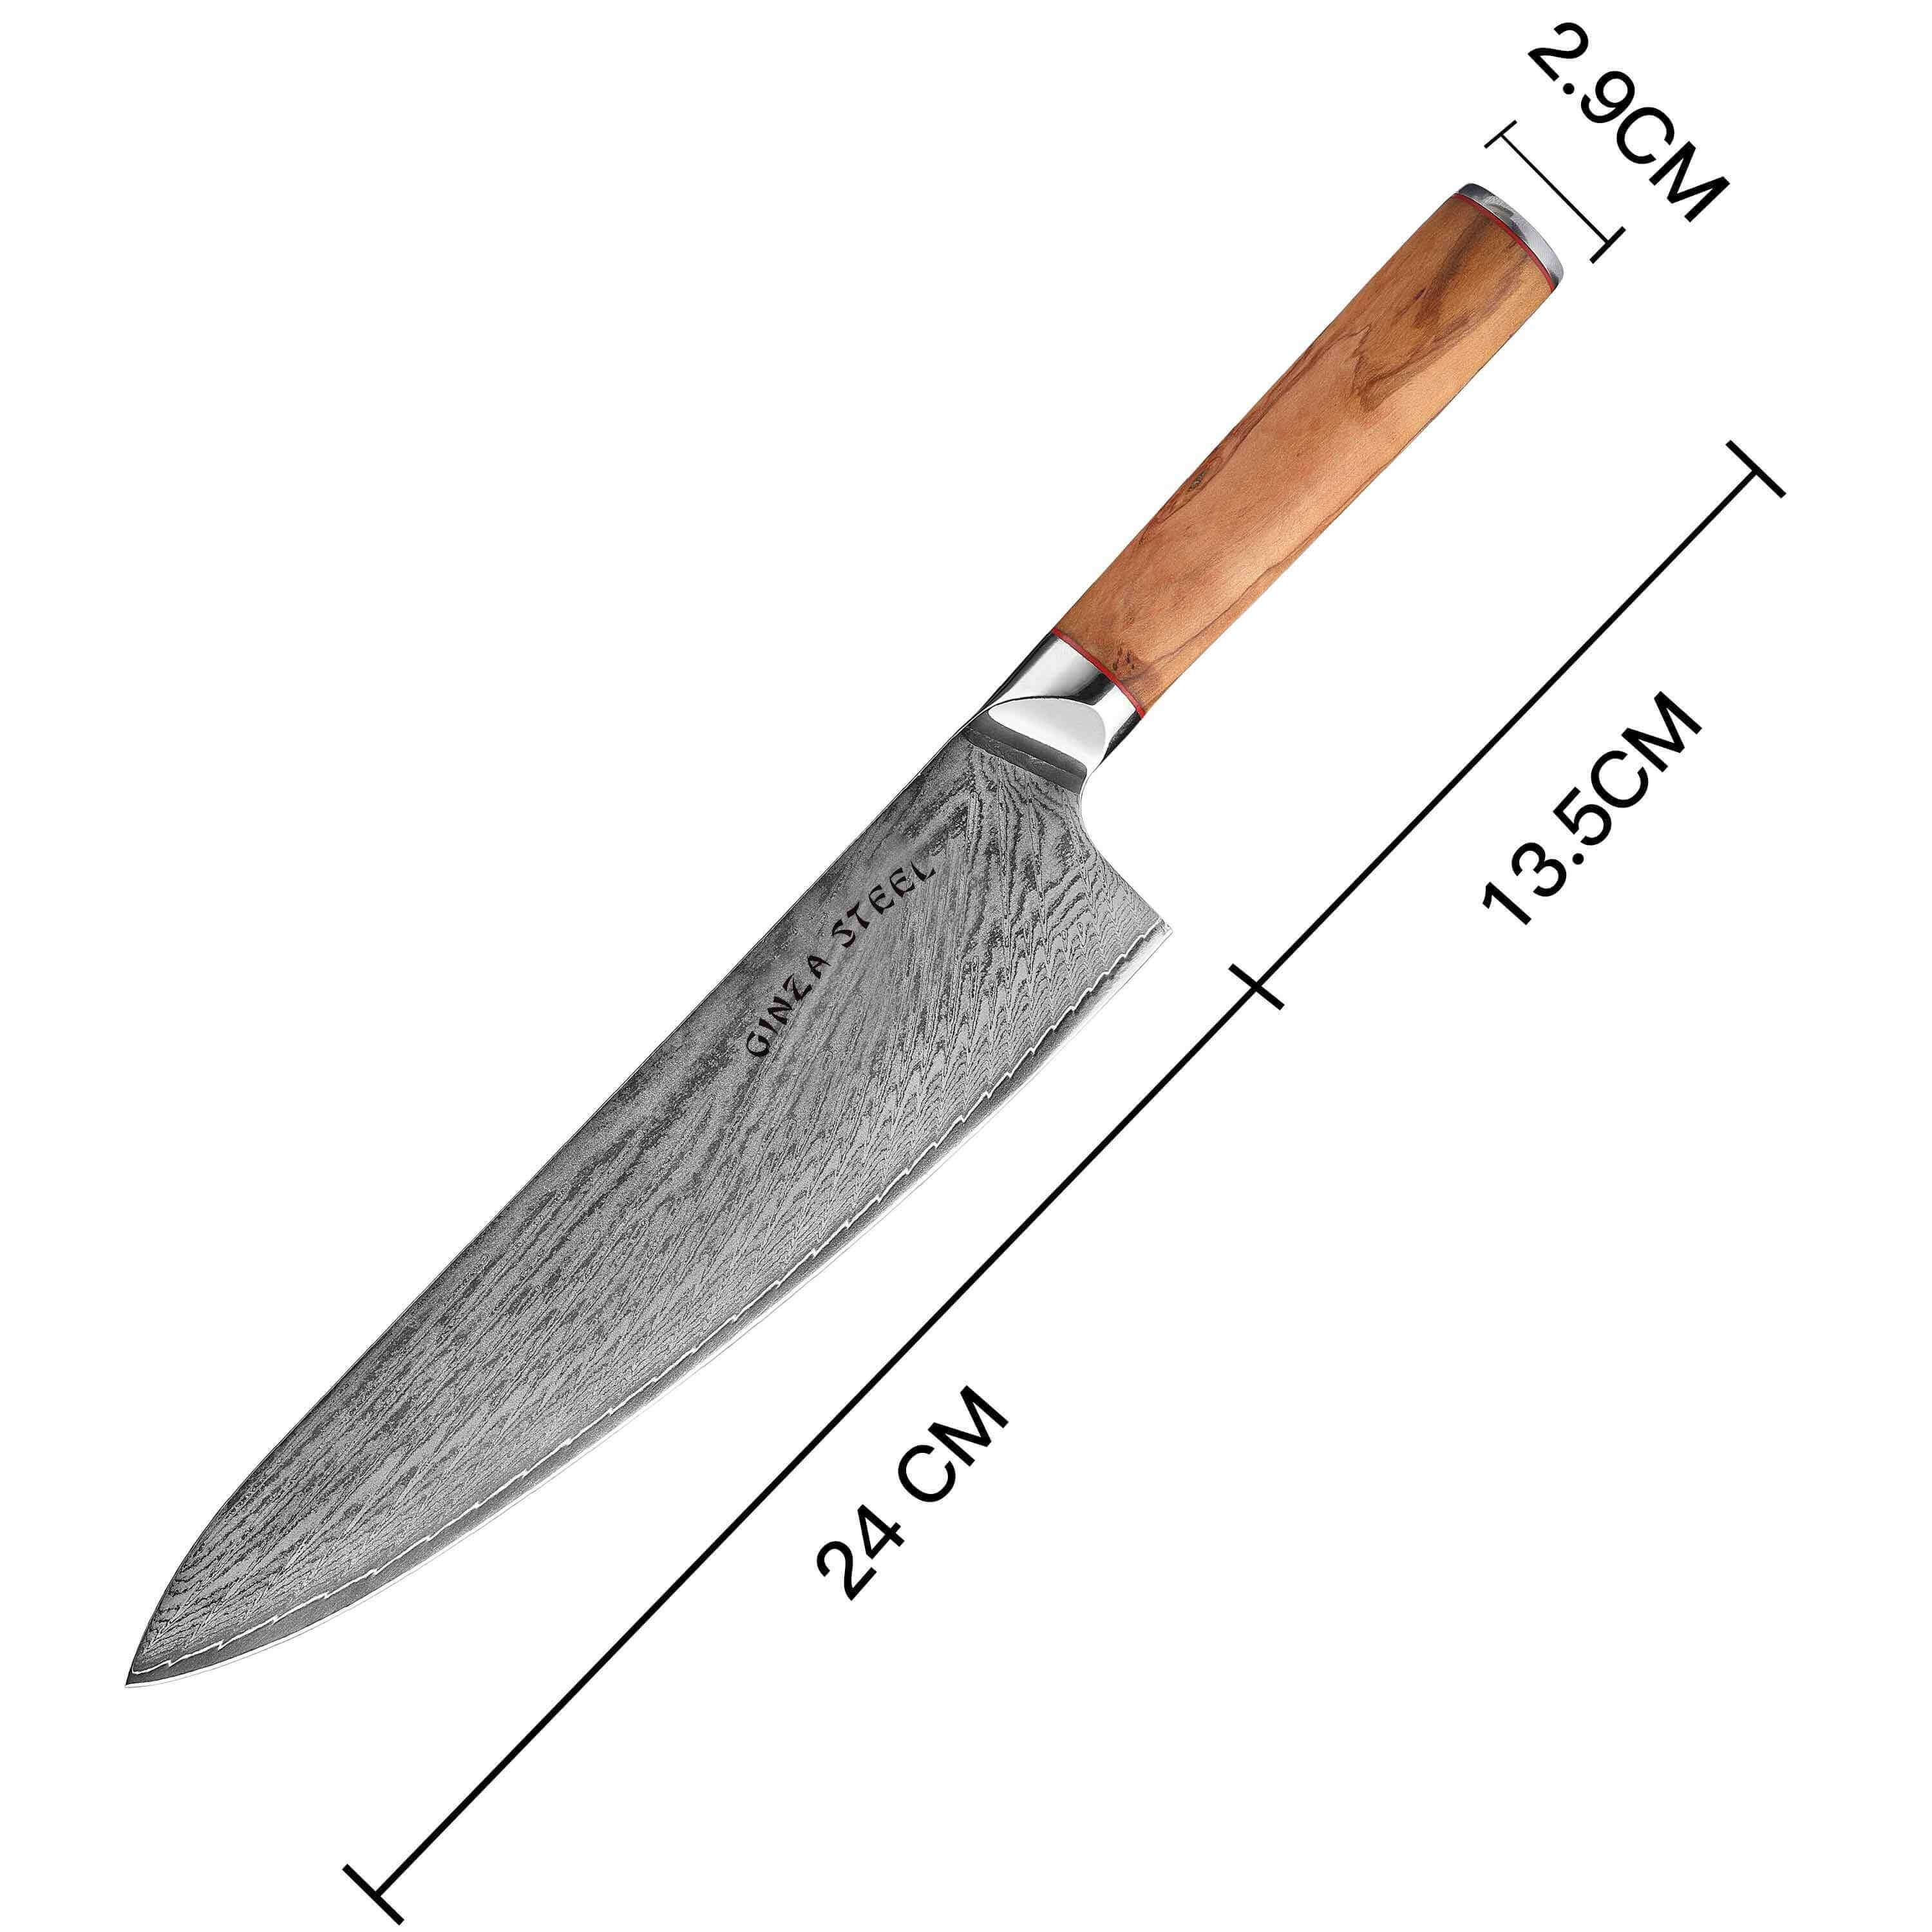 MIA 24 Chef Knife 9" Damascus AUS10 Steel 67 Layer/Italian Olive Wood Handle